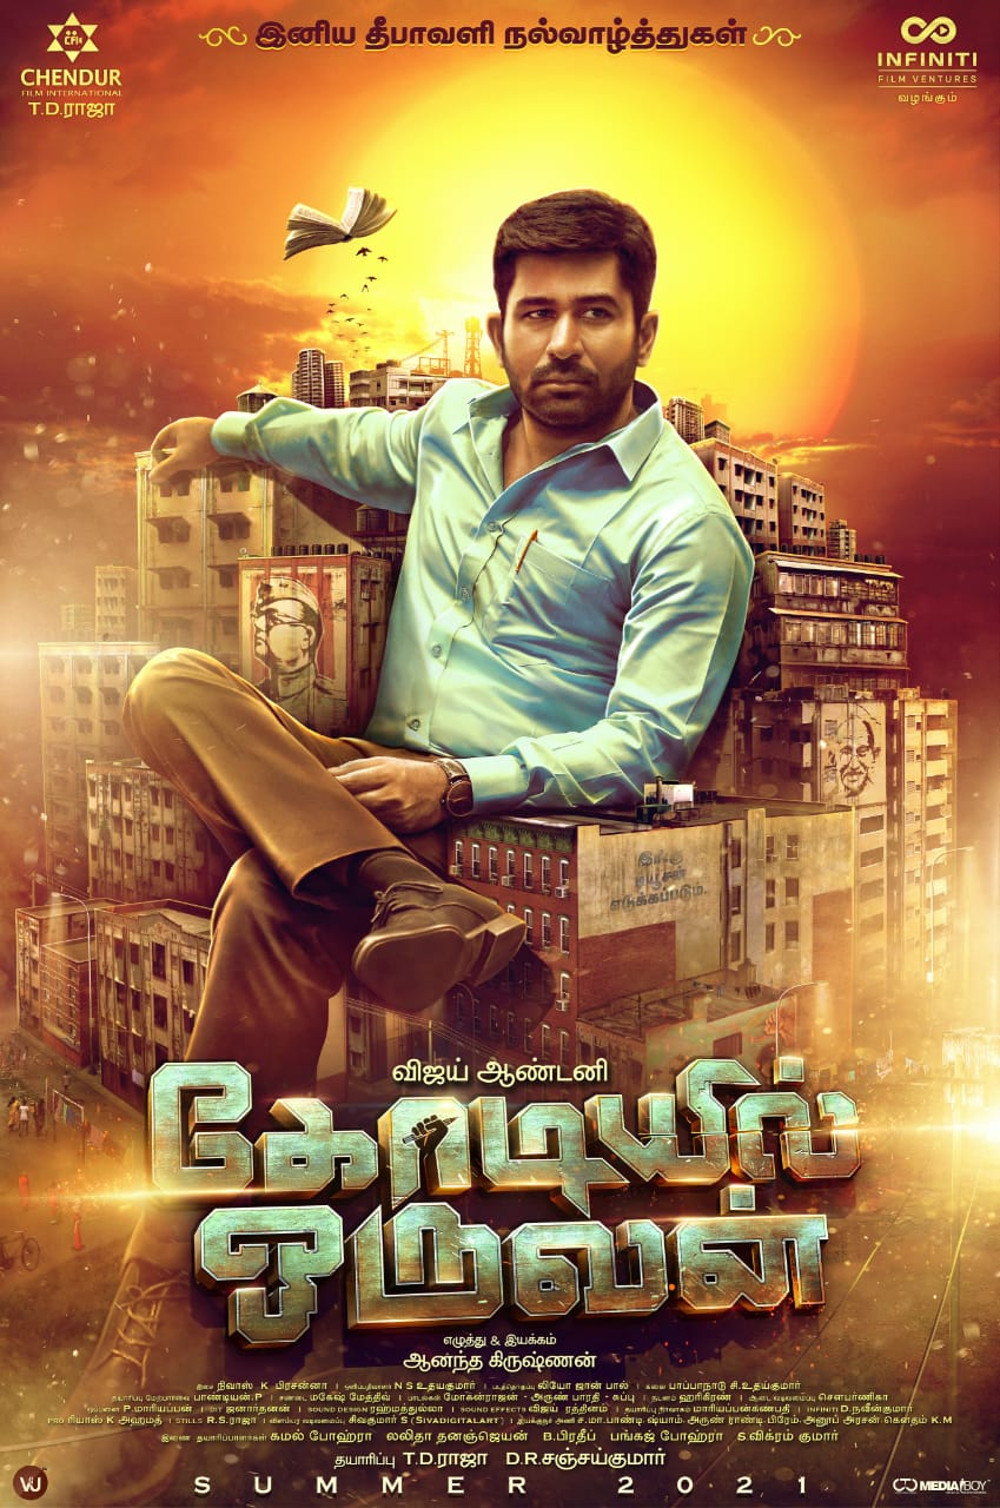 Tamil Movie Deepavali Wishes Posters 2020